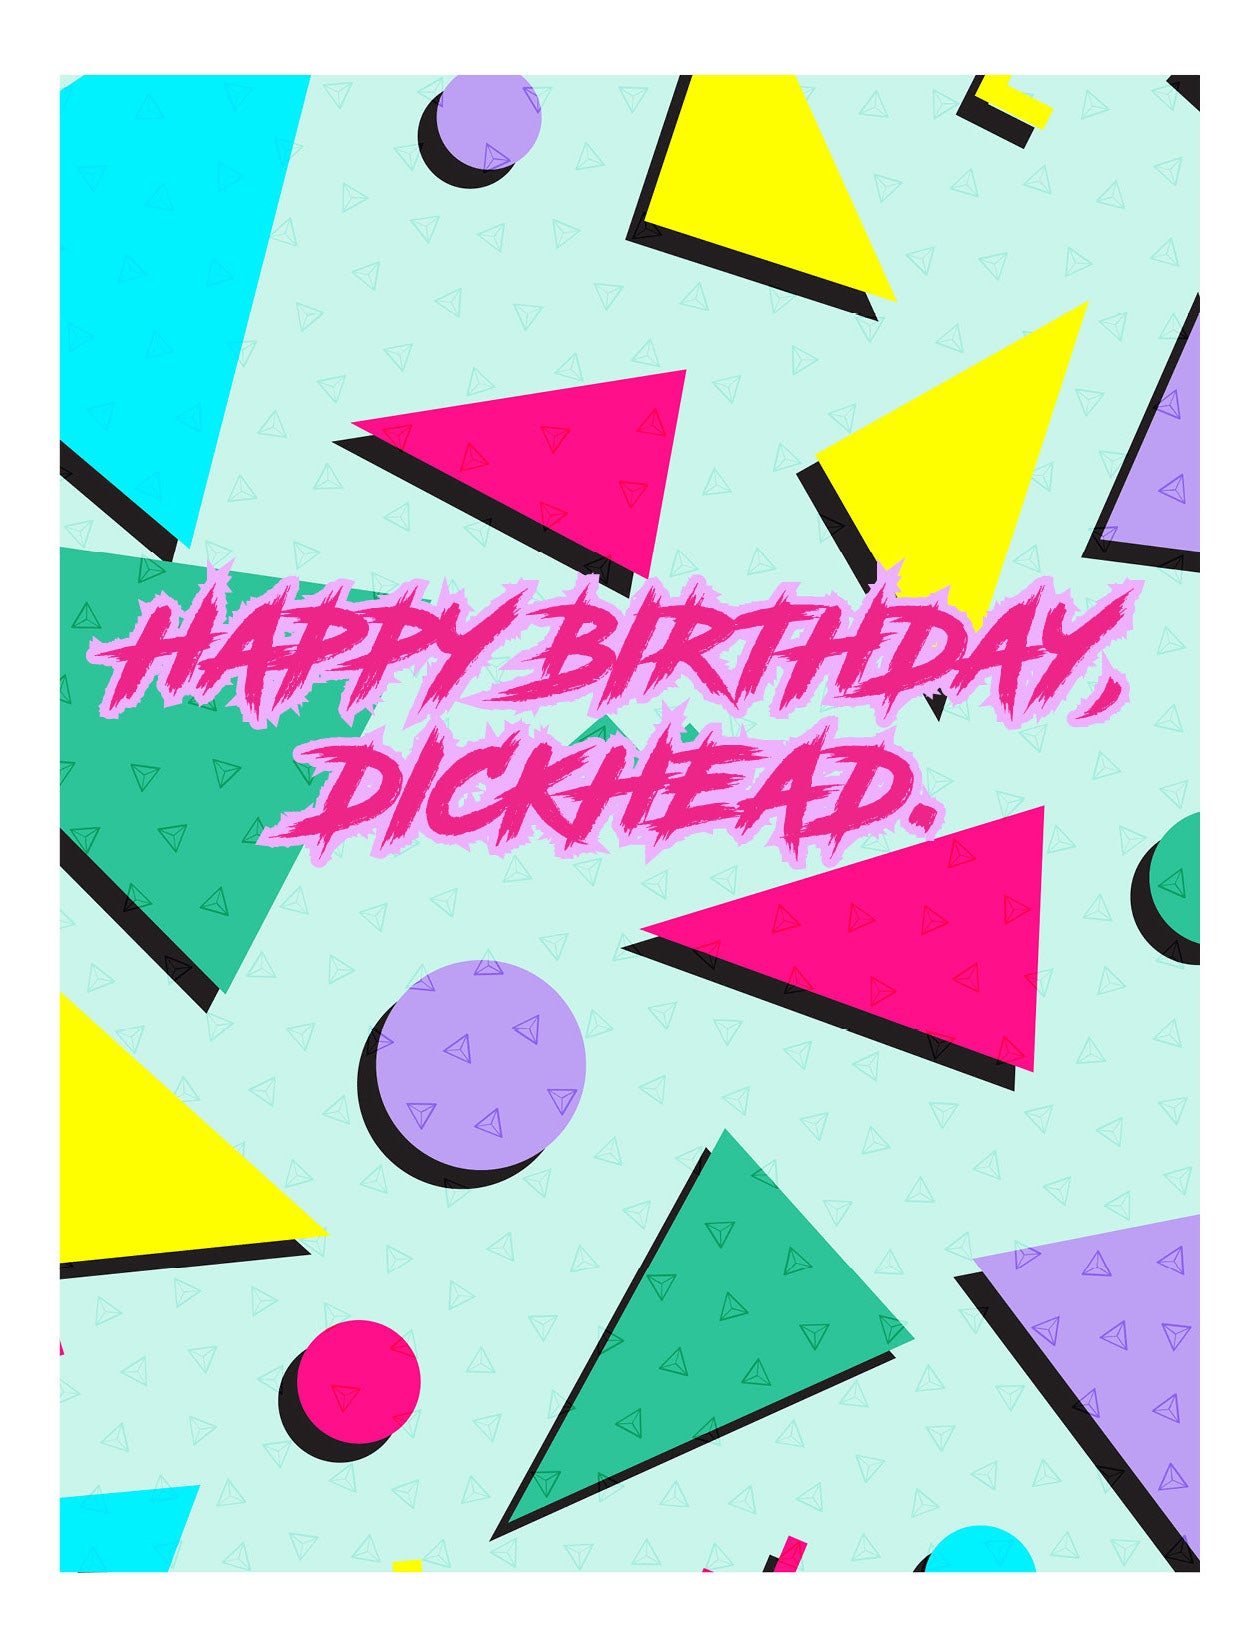 The Happy Birthday Dickhead Card